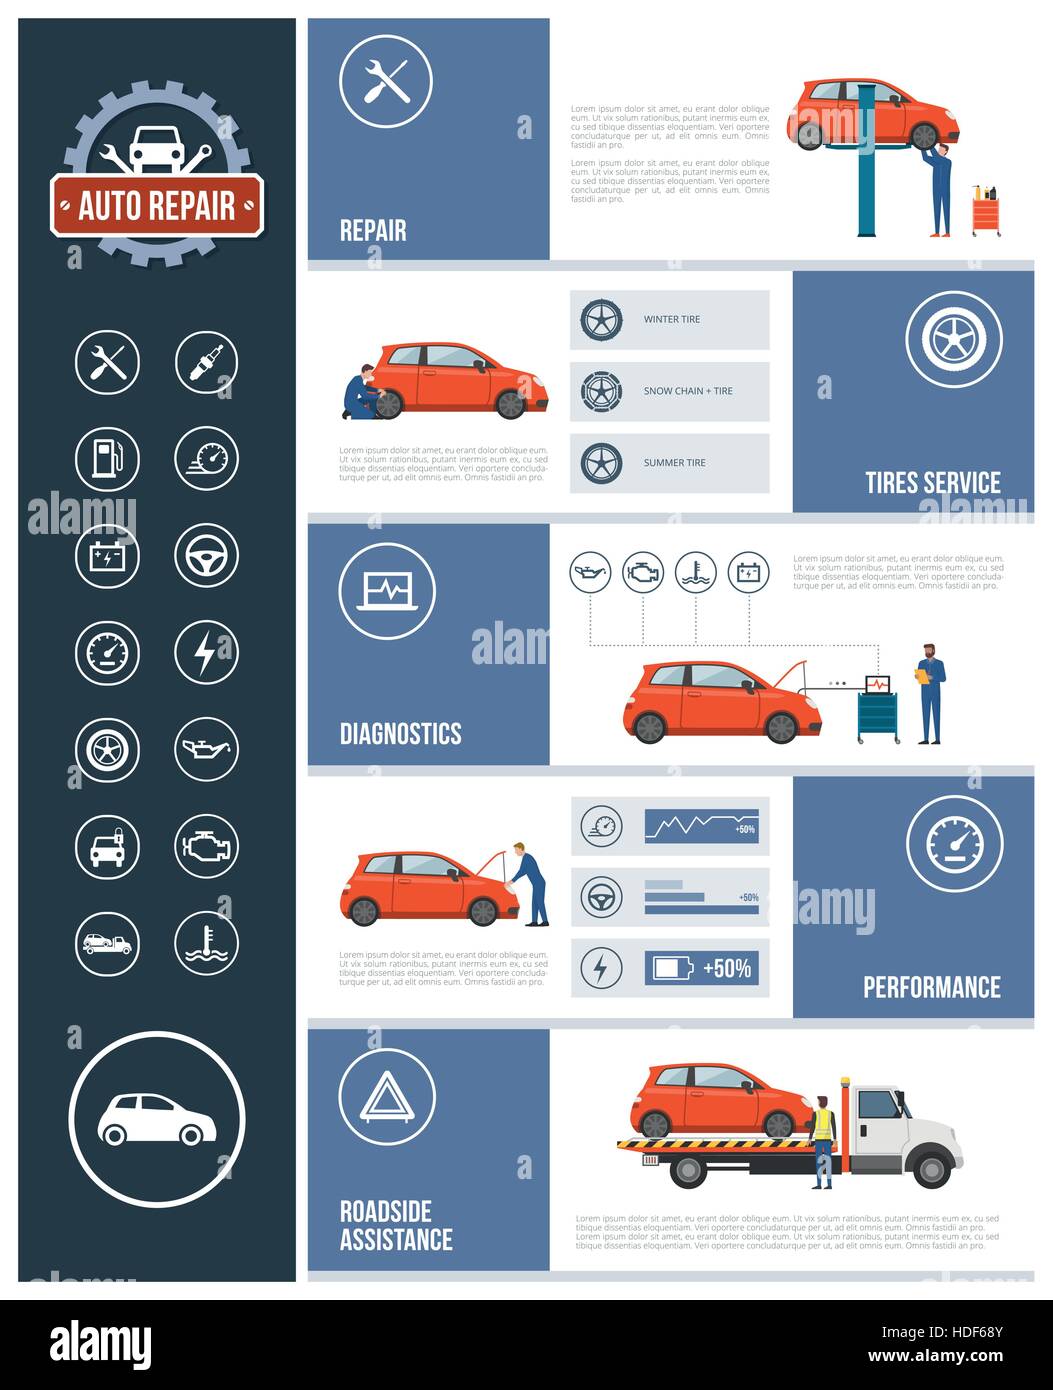 Auto-Reparatur-Service-Infografik mit Mechanik arbeiten am Auto, Text und Icons Set: Reparatur, Reifen, Diagnostik, Leistung, Pannenhilfe Stock Vektor